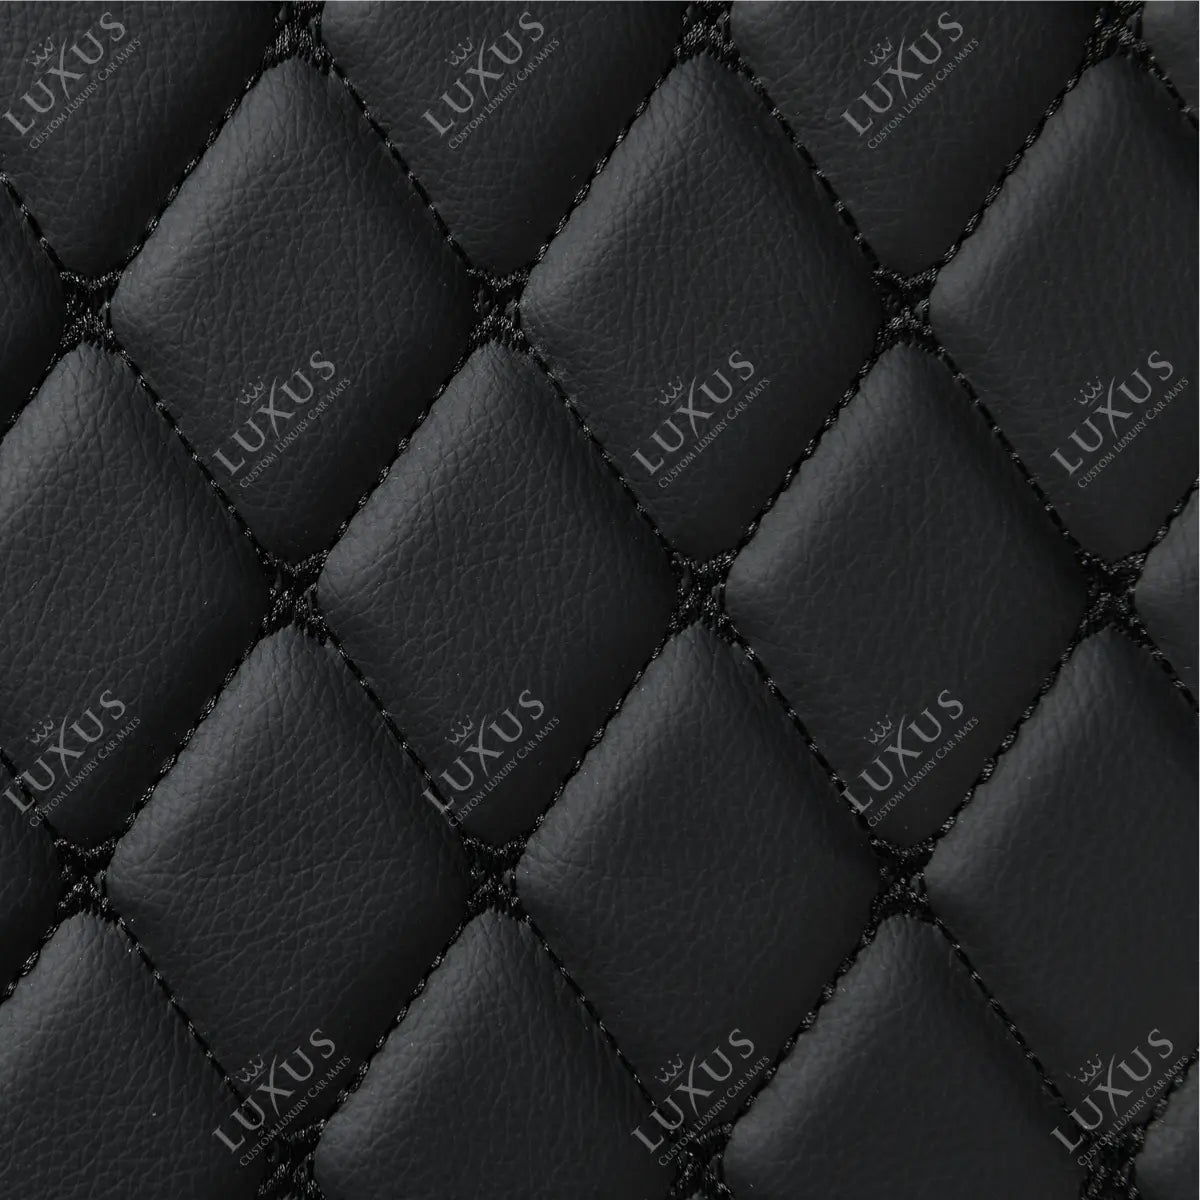 Luxus Car Mats™ - Svart og svart søm 3D luksusskinnstøvel/bagasjematte